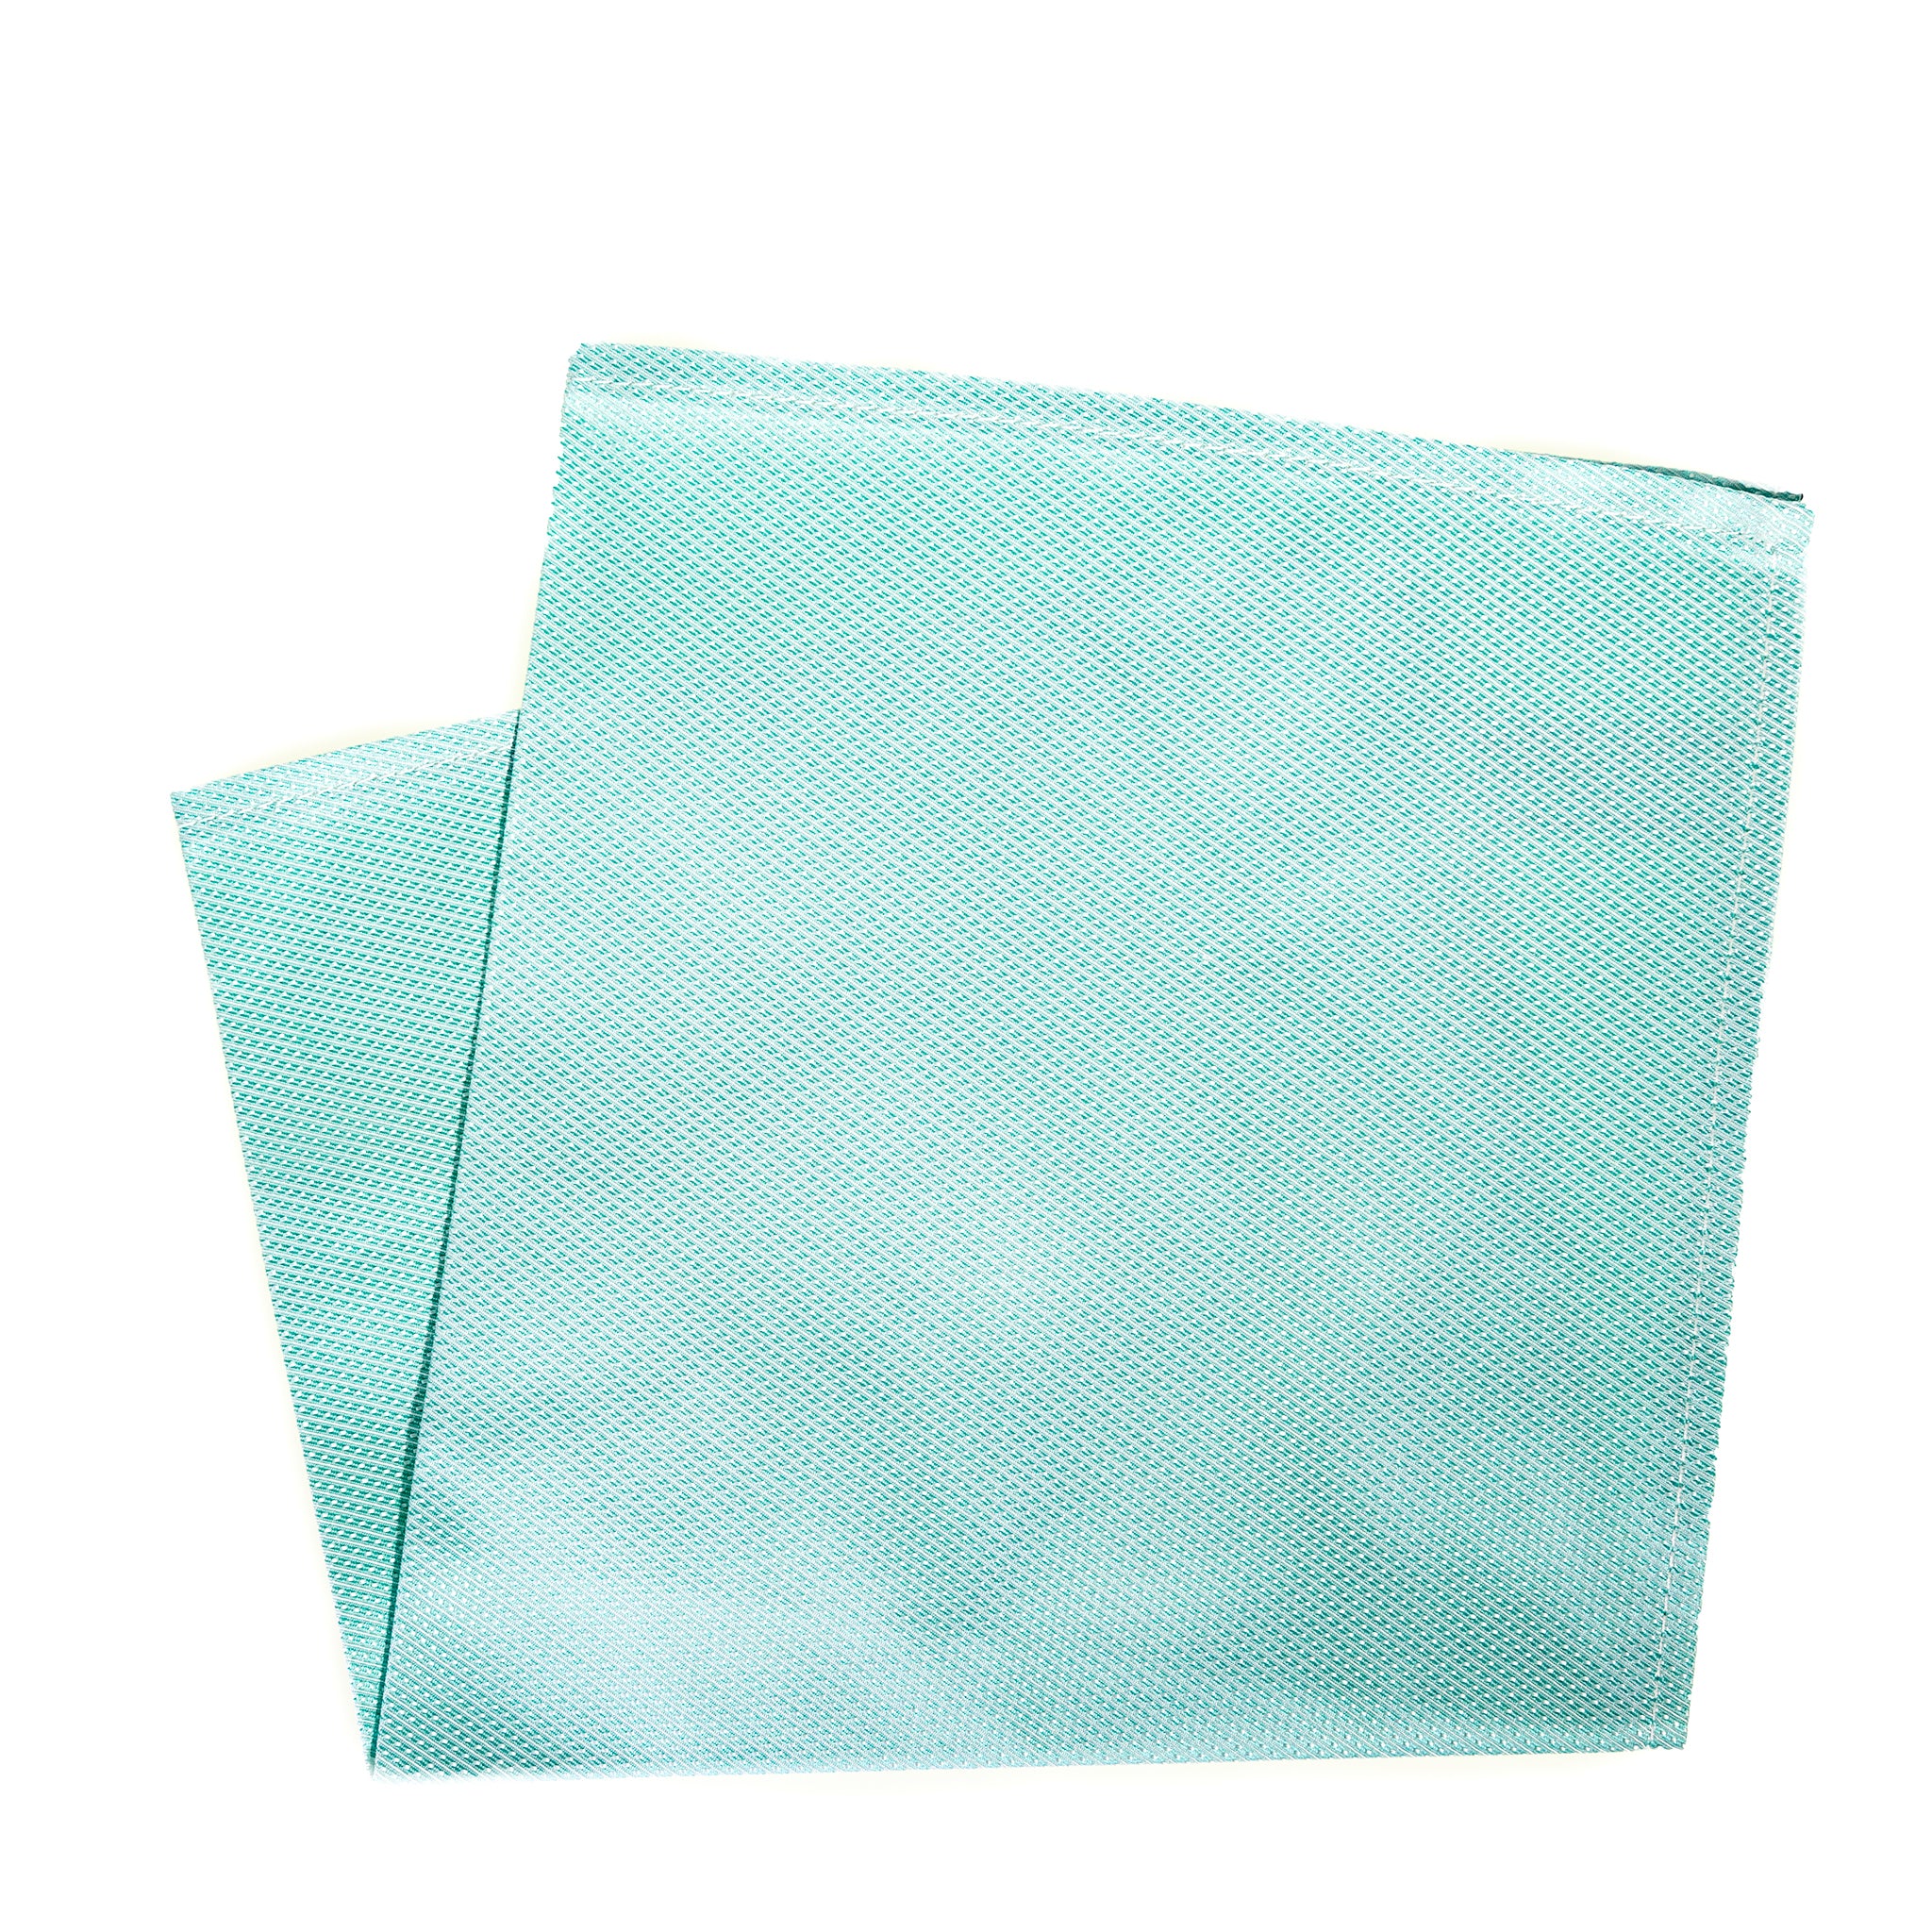 Seafoam Iridescent Silk Pocket Square